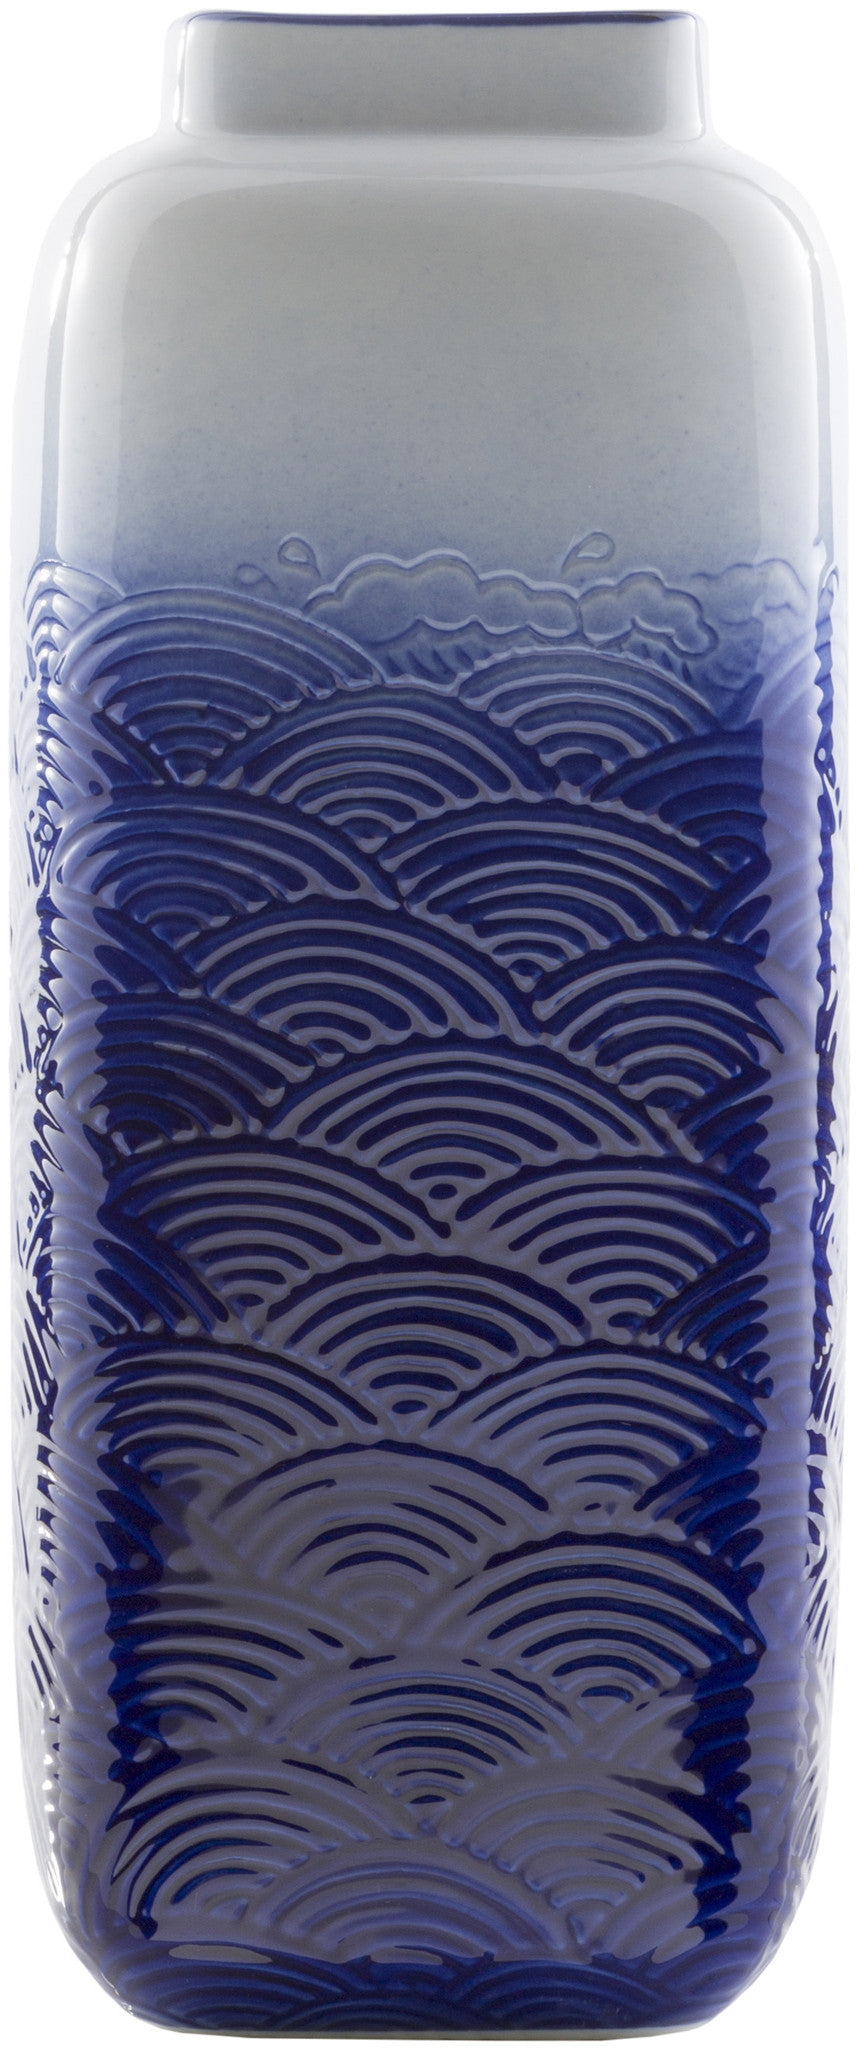 Surya Azul AZL-802 Vase Table Vase Medium 4.72 X 4.72 X 11.81 inches